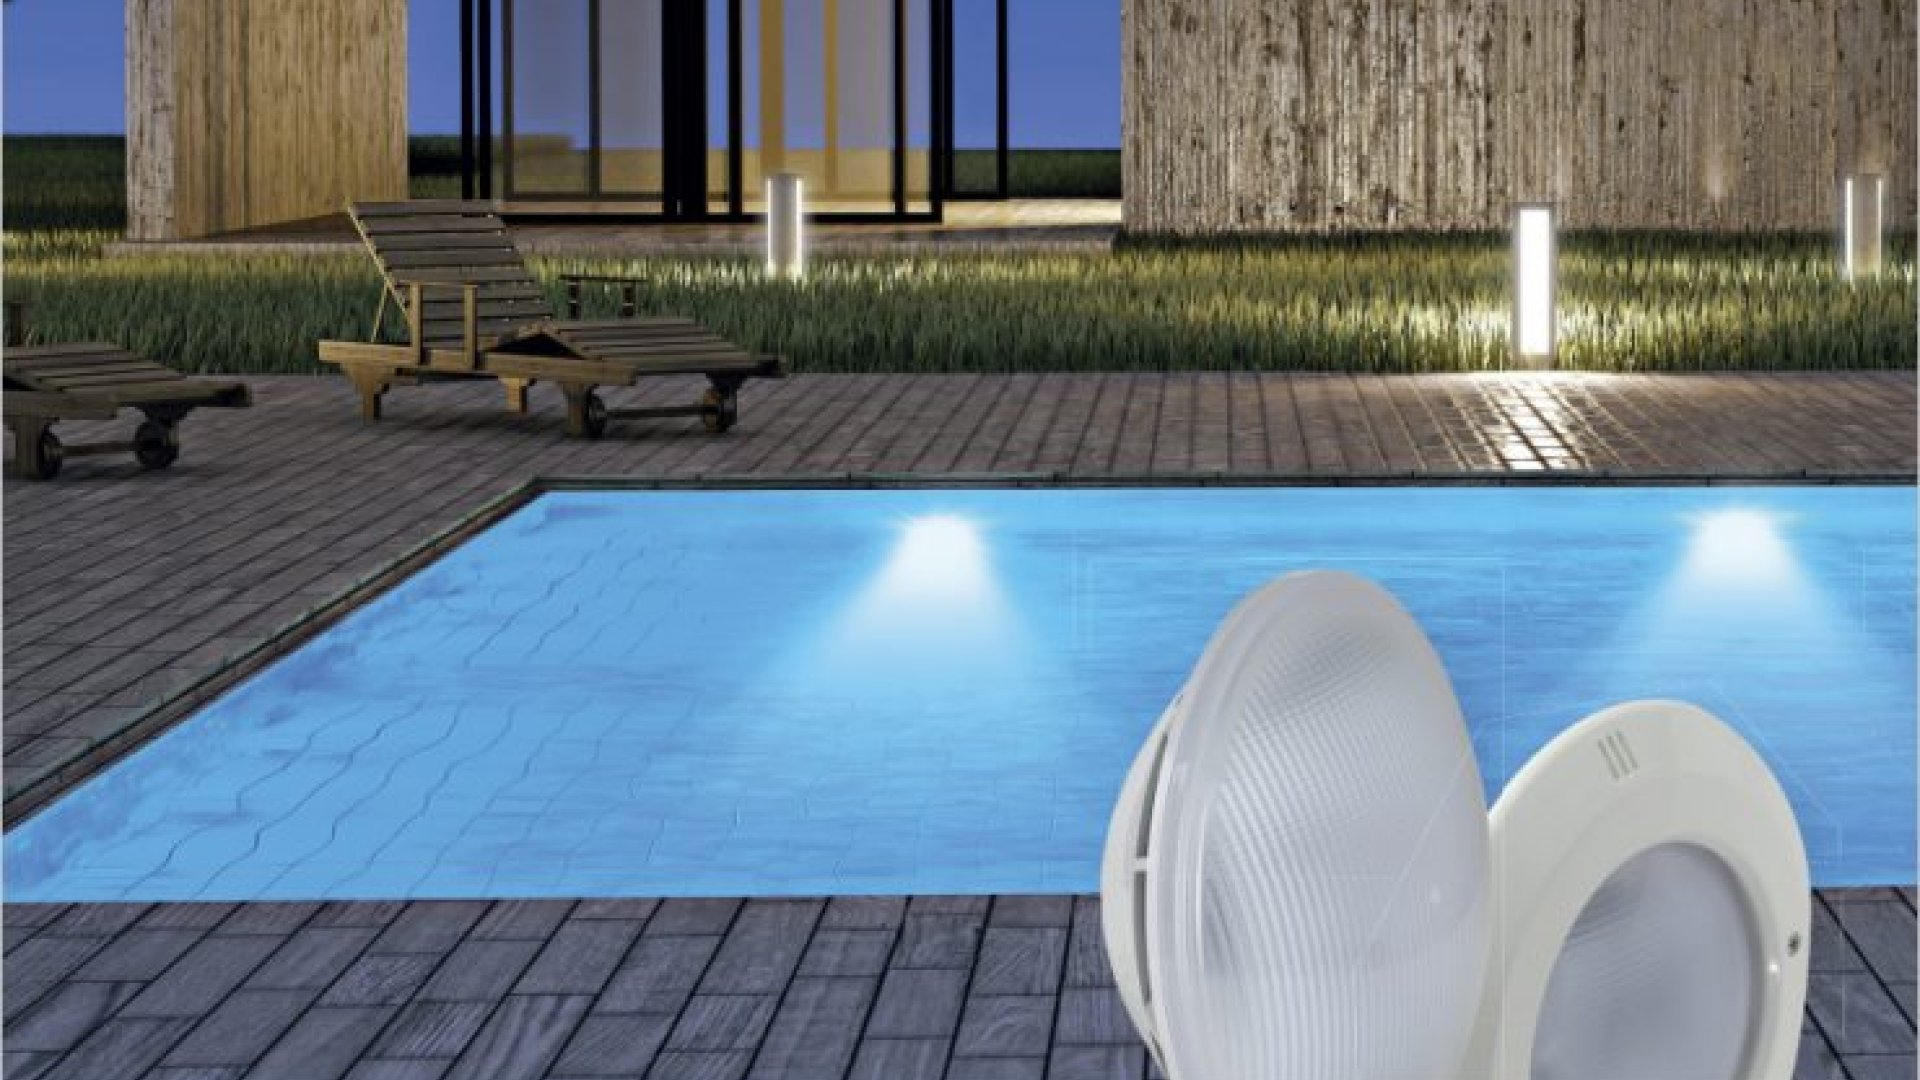 Luces LED para iluminar tu piscina de forma eficiente